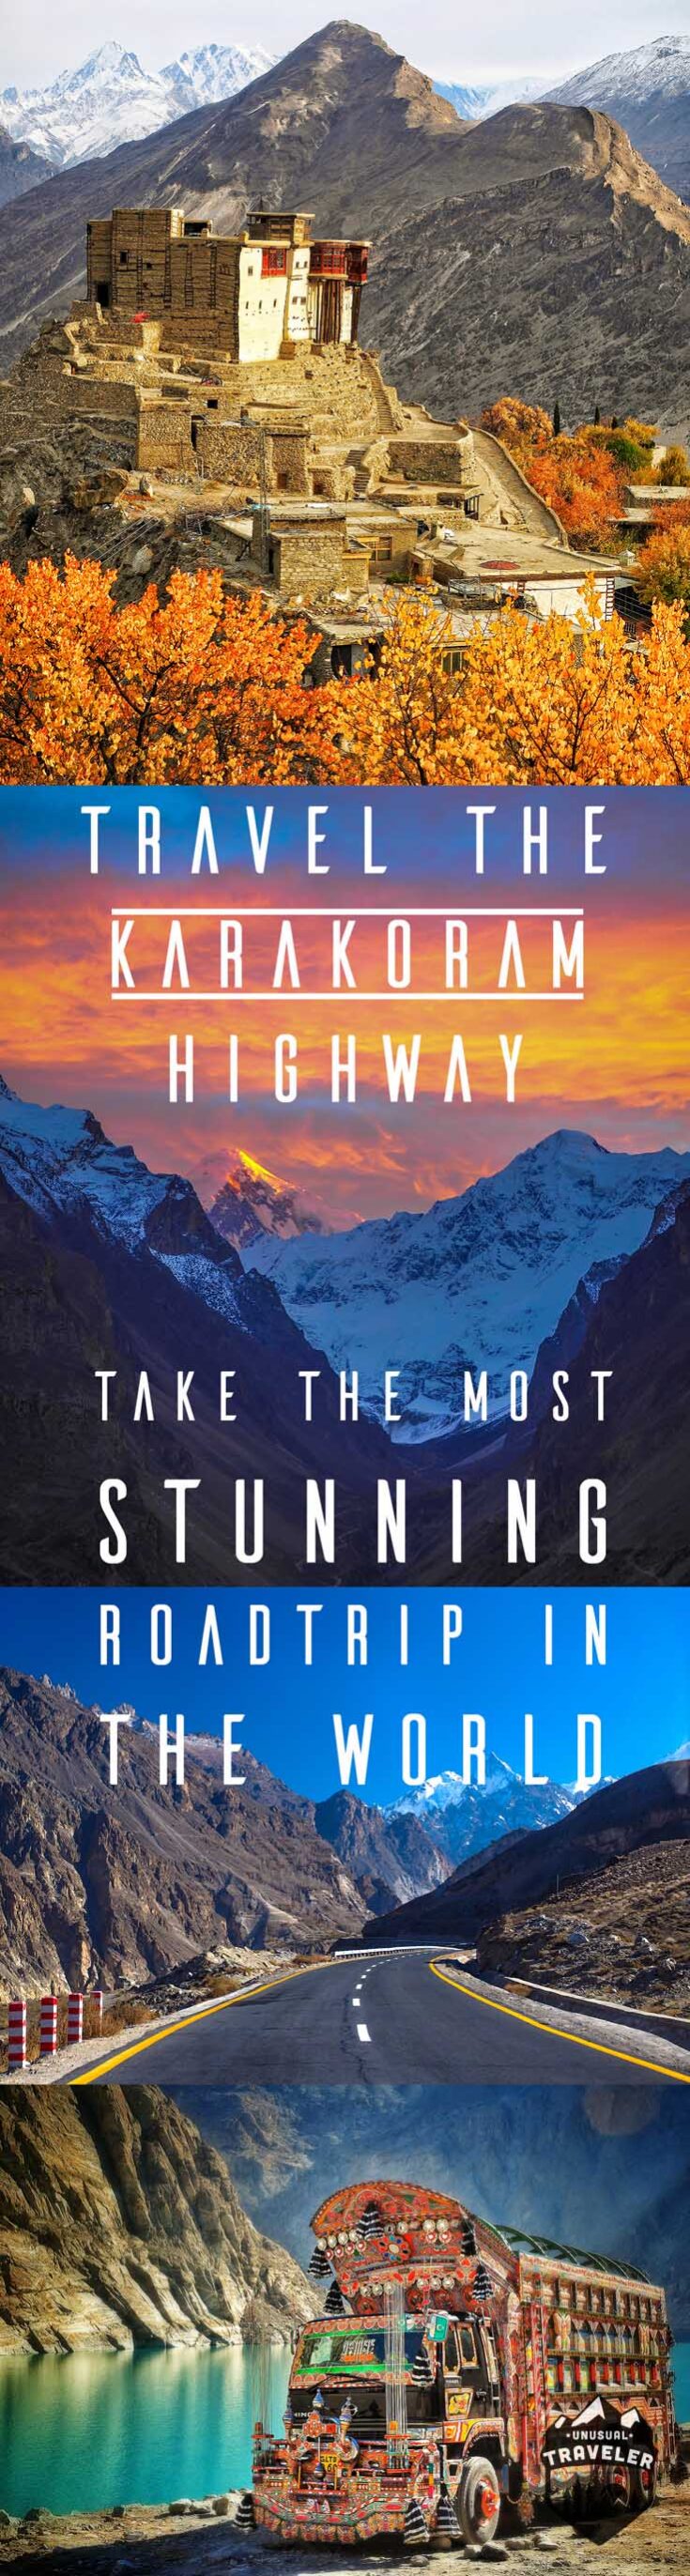 Travel Guide To Karakoram Highway in Pakistan